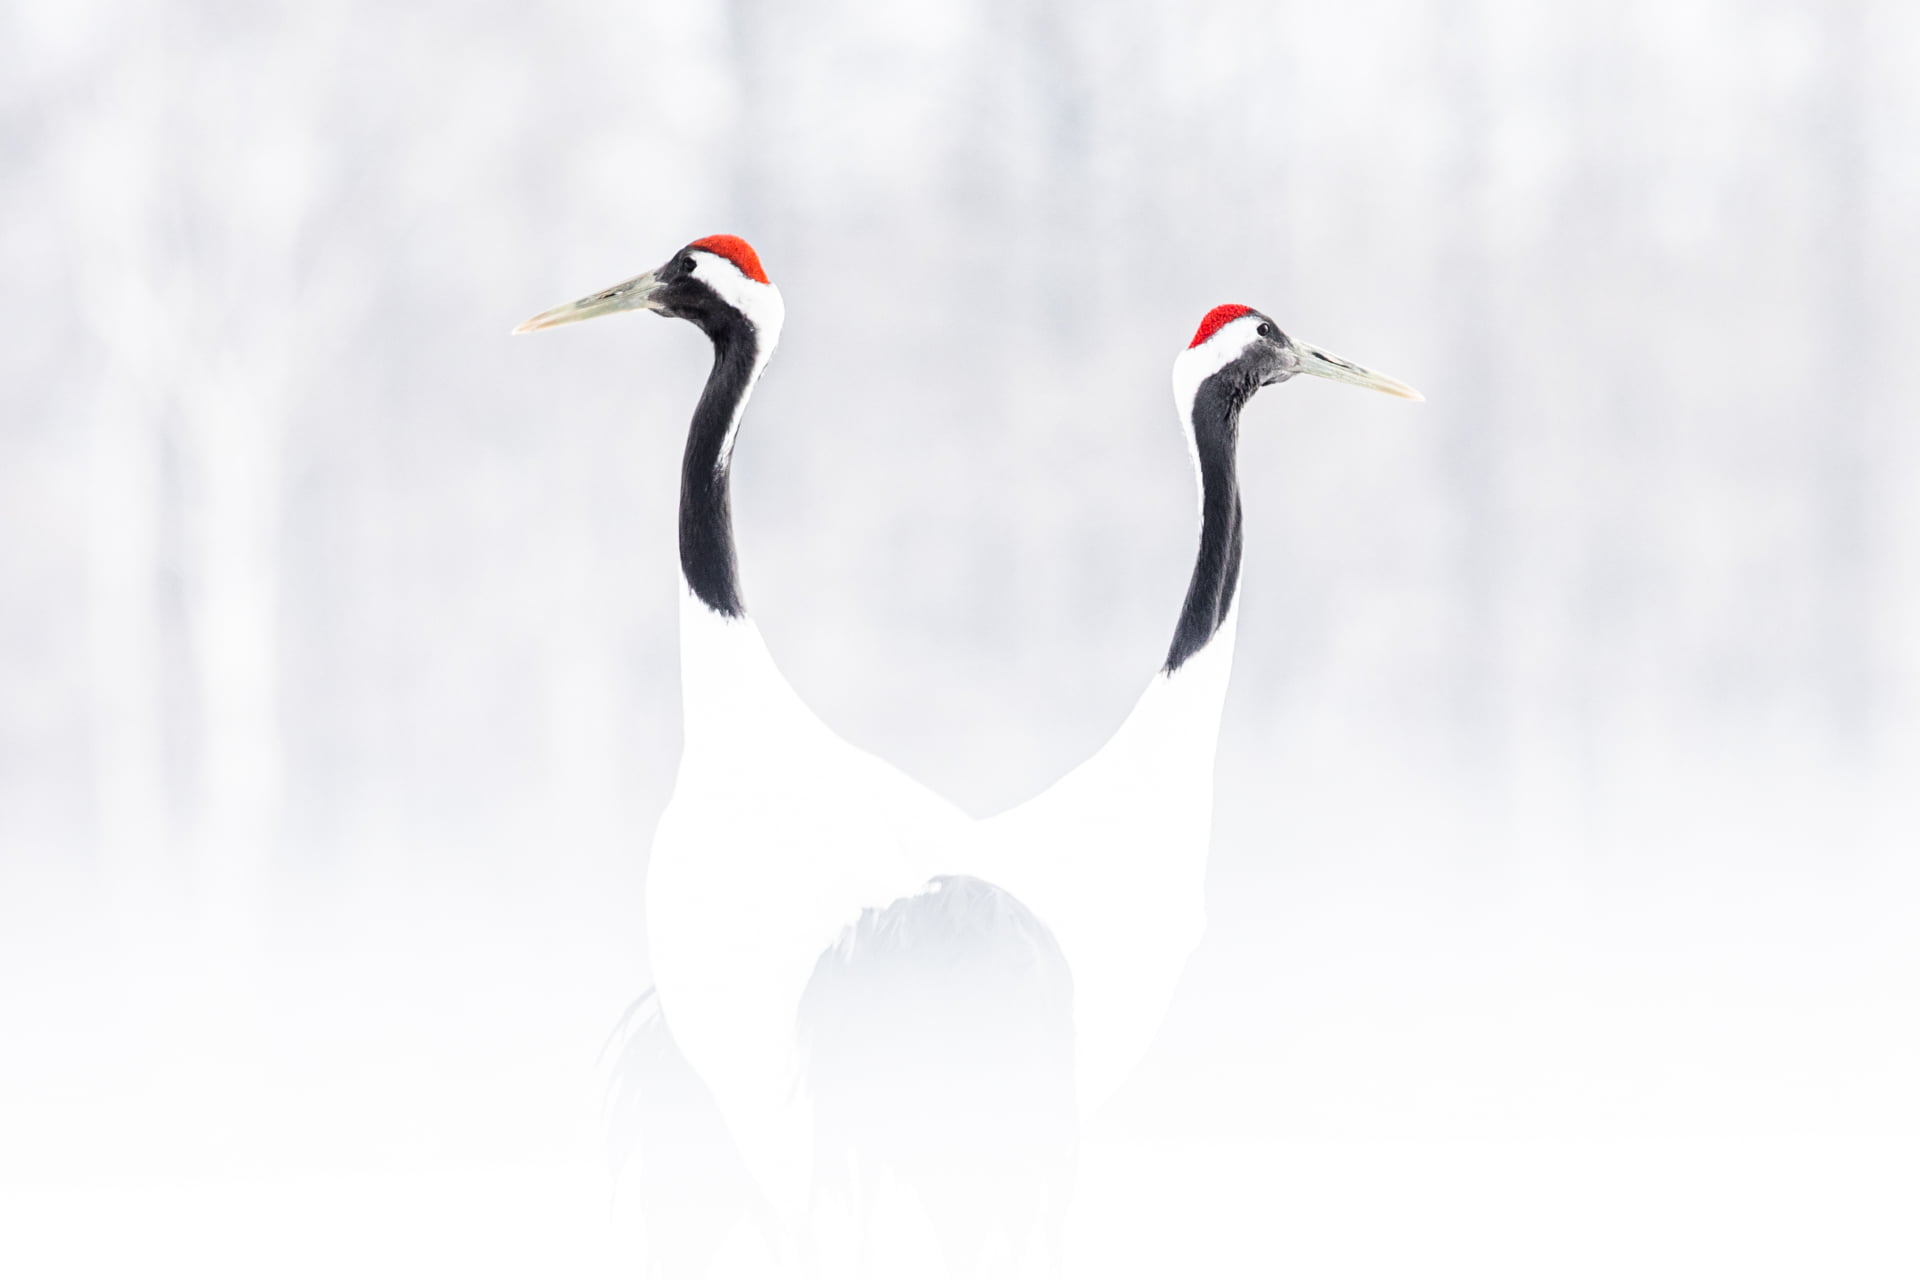 Deux Grues du Japon dans une ambiance enneigée, Hokkaido, Japon - Two Red-crowned Crane in a snowy atmosphere, Hokkaido, Japan / Grus japonensis